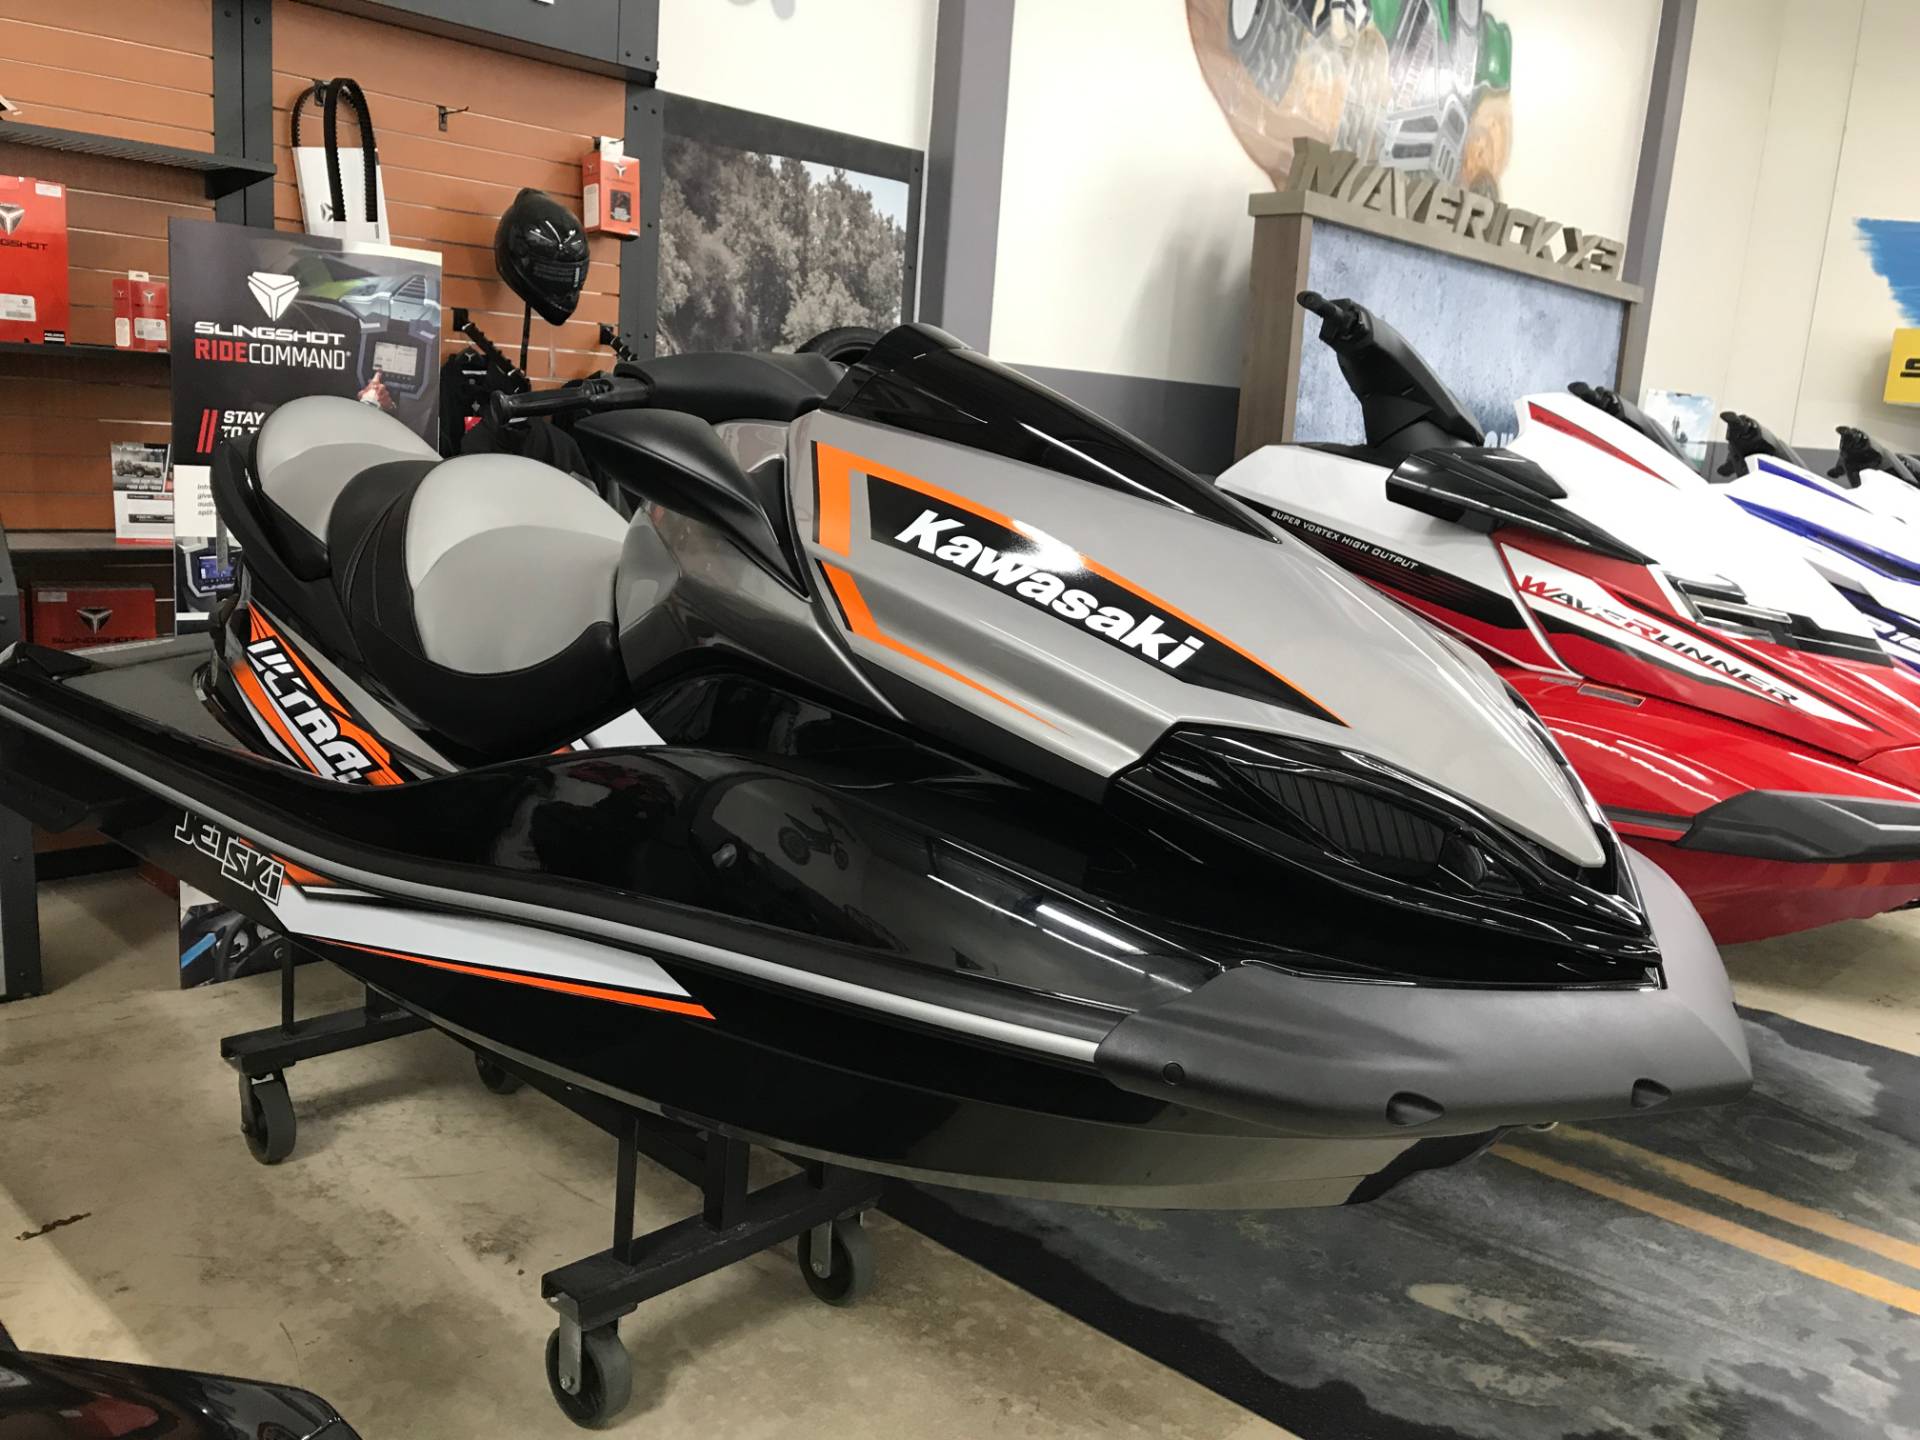 New 2018 Kawasaki Jet Ski Ultra LX Watercraft in Corona, CA | Stock ...